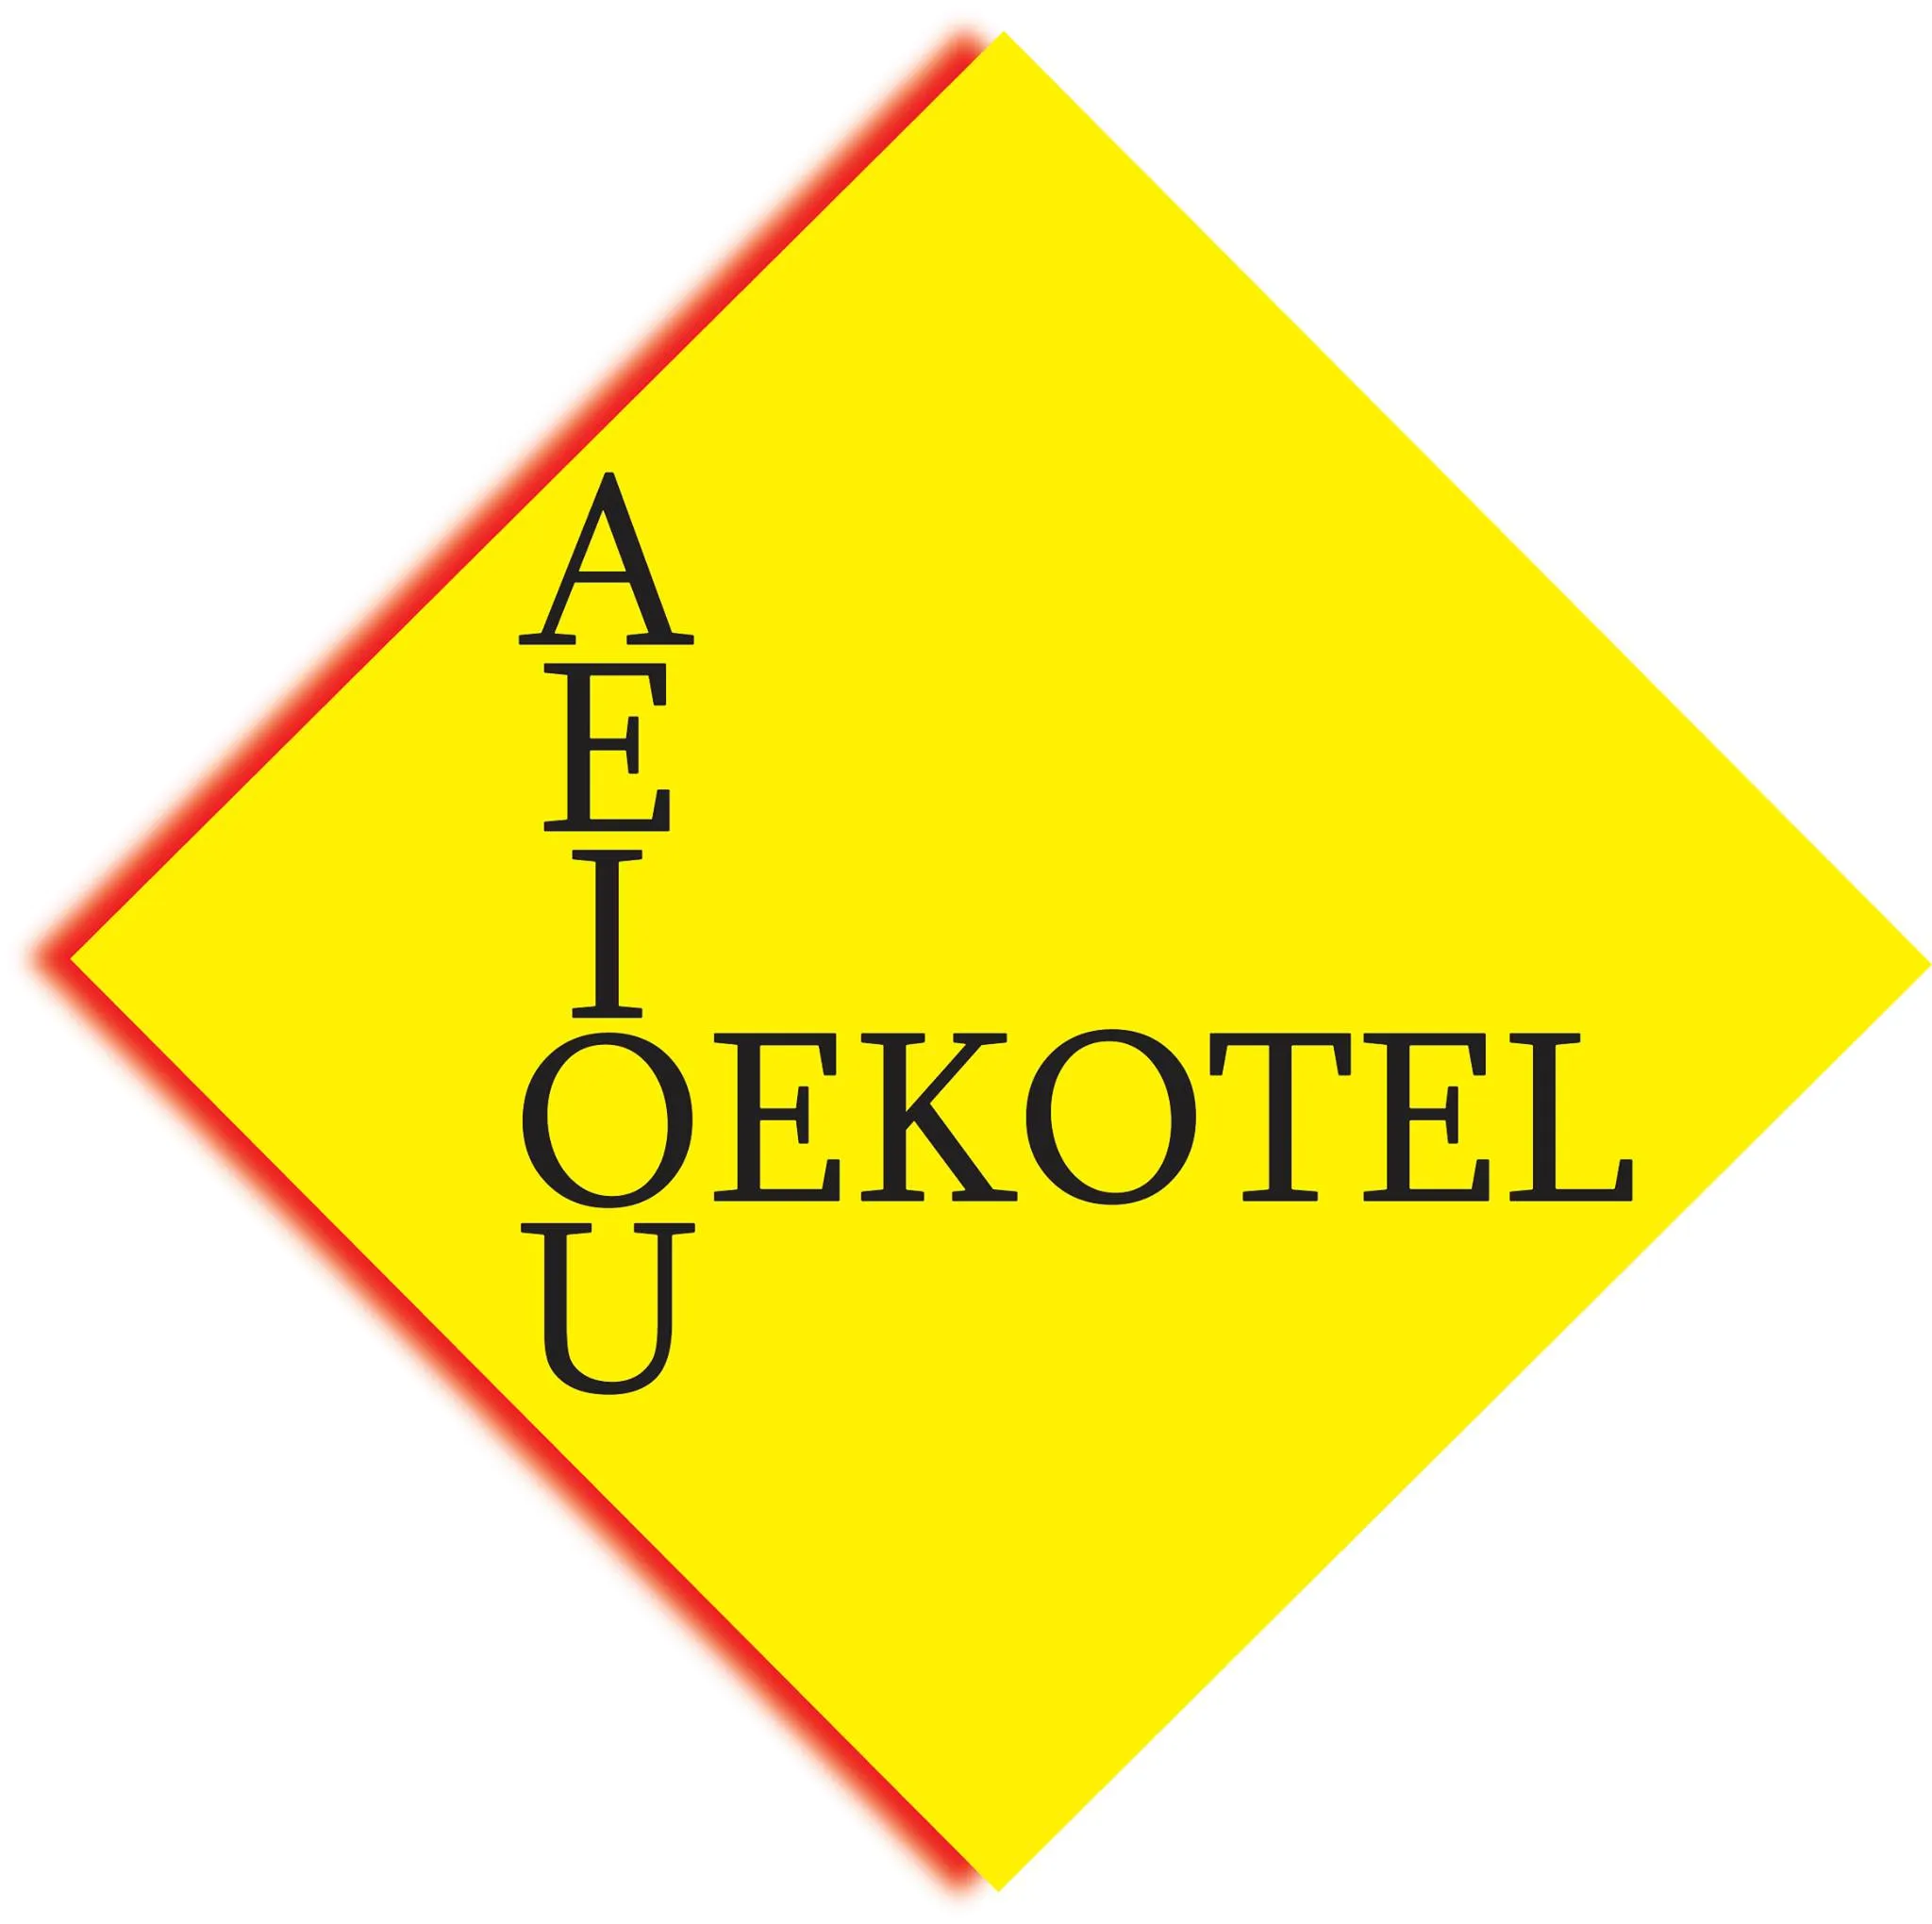 oekotel.com